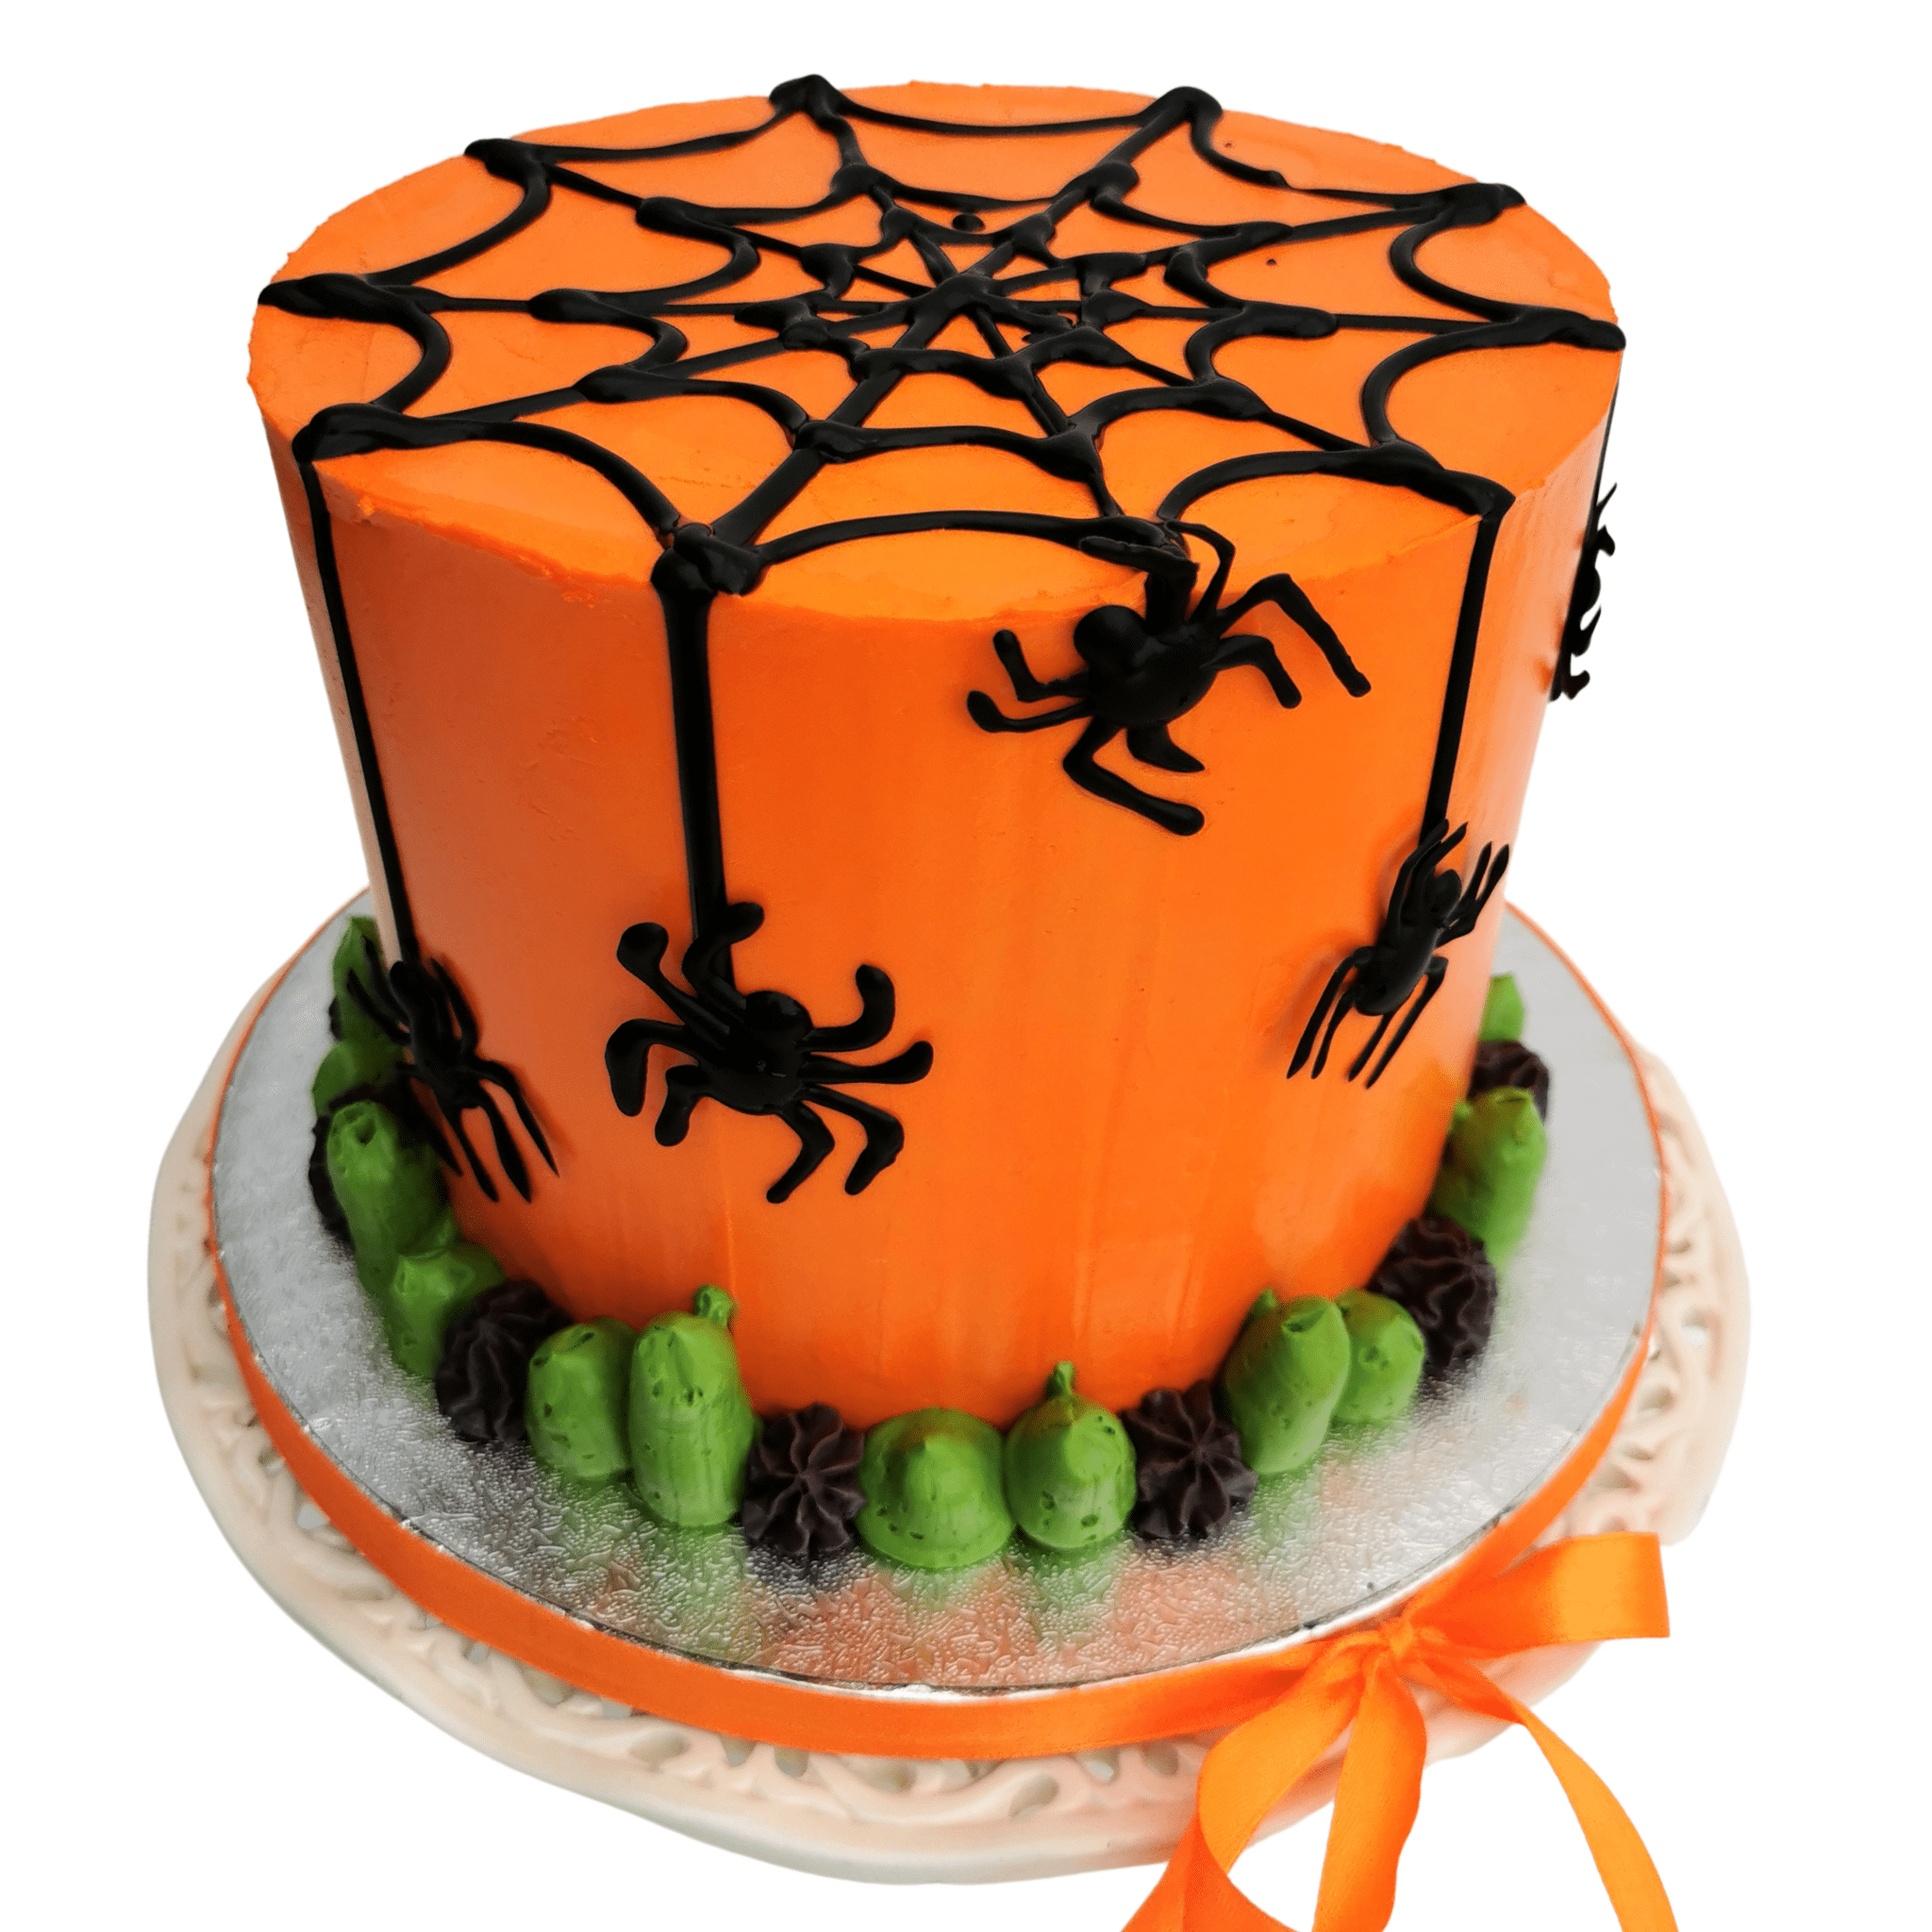 Webbed Spider Cake Recipe | Buddy Valastro | Food Network